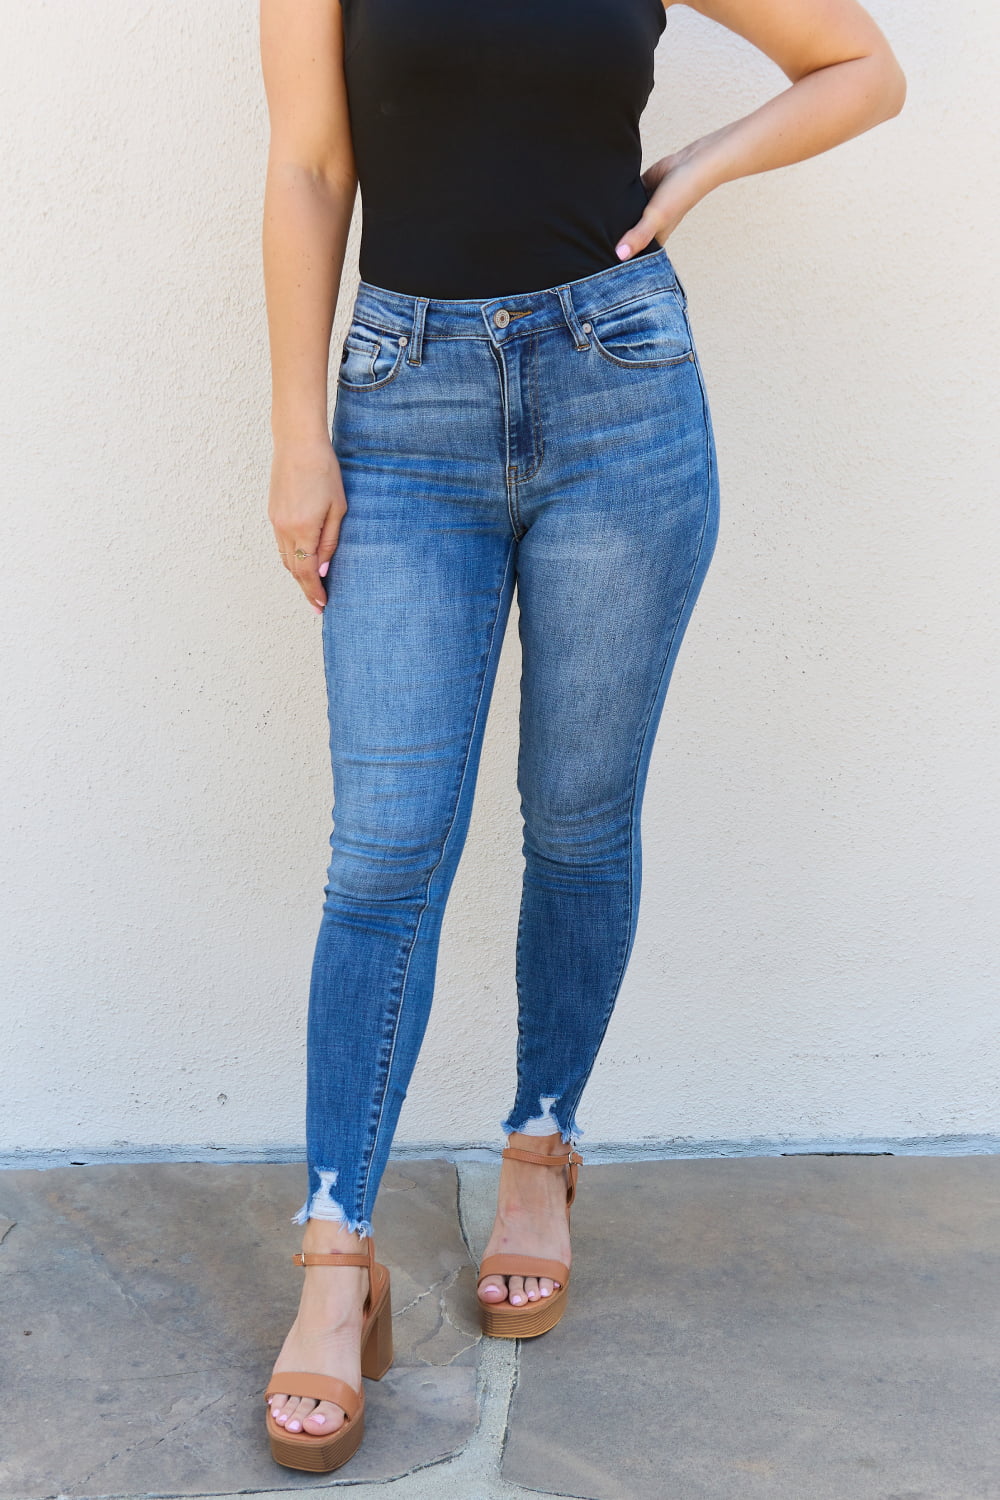 Kancan Lindsay Raw Hem High Rise Skinny Jeans - Online Only